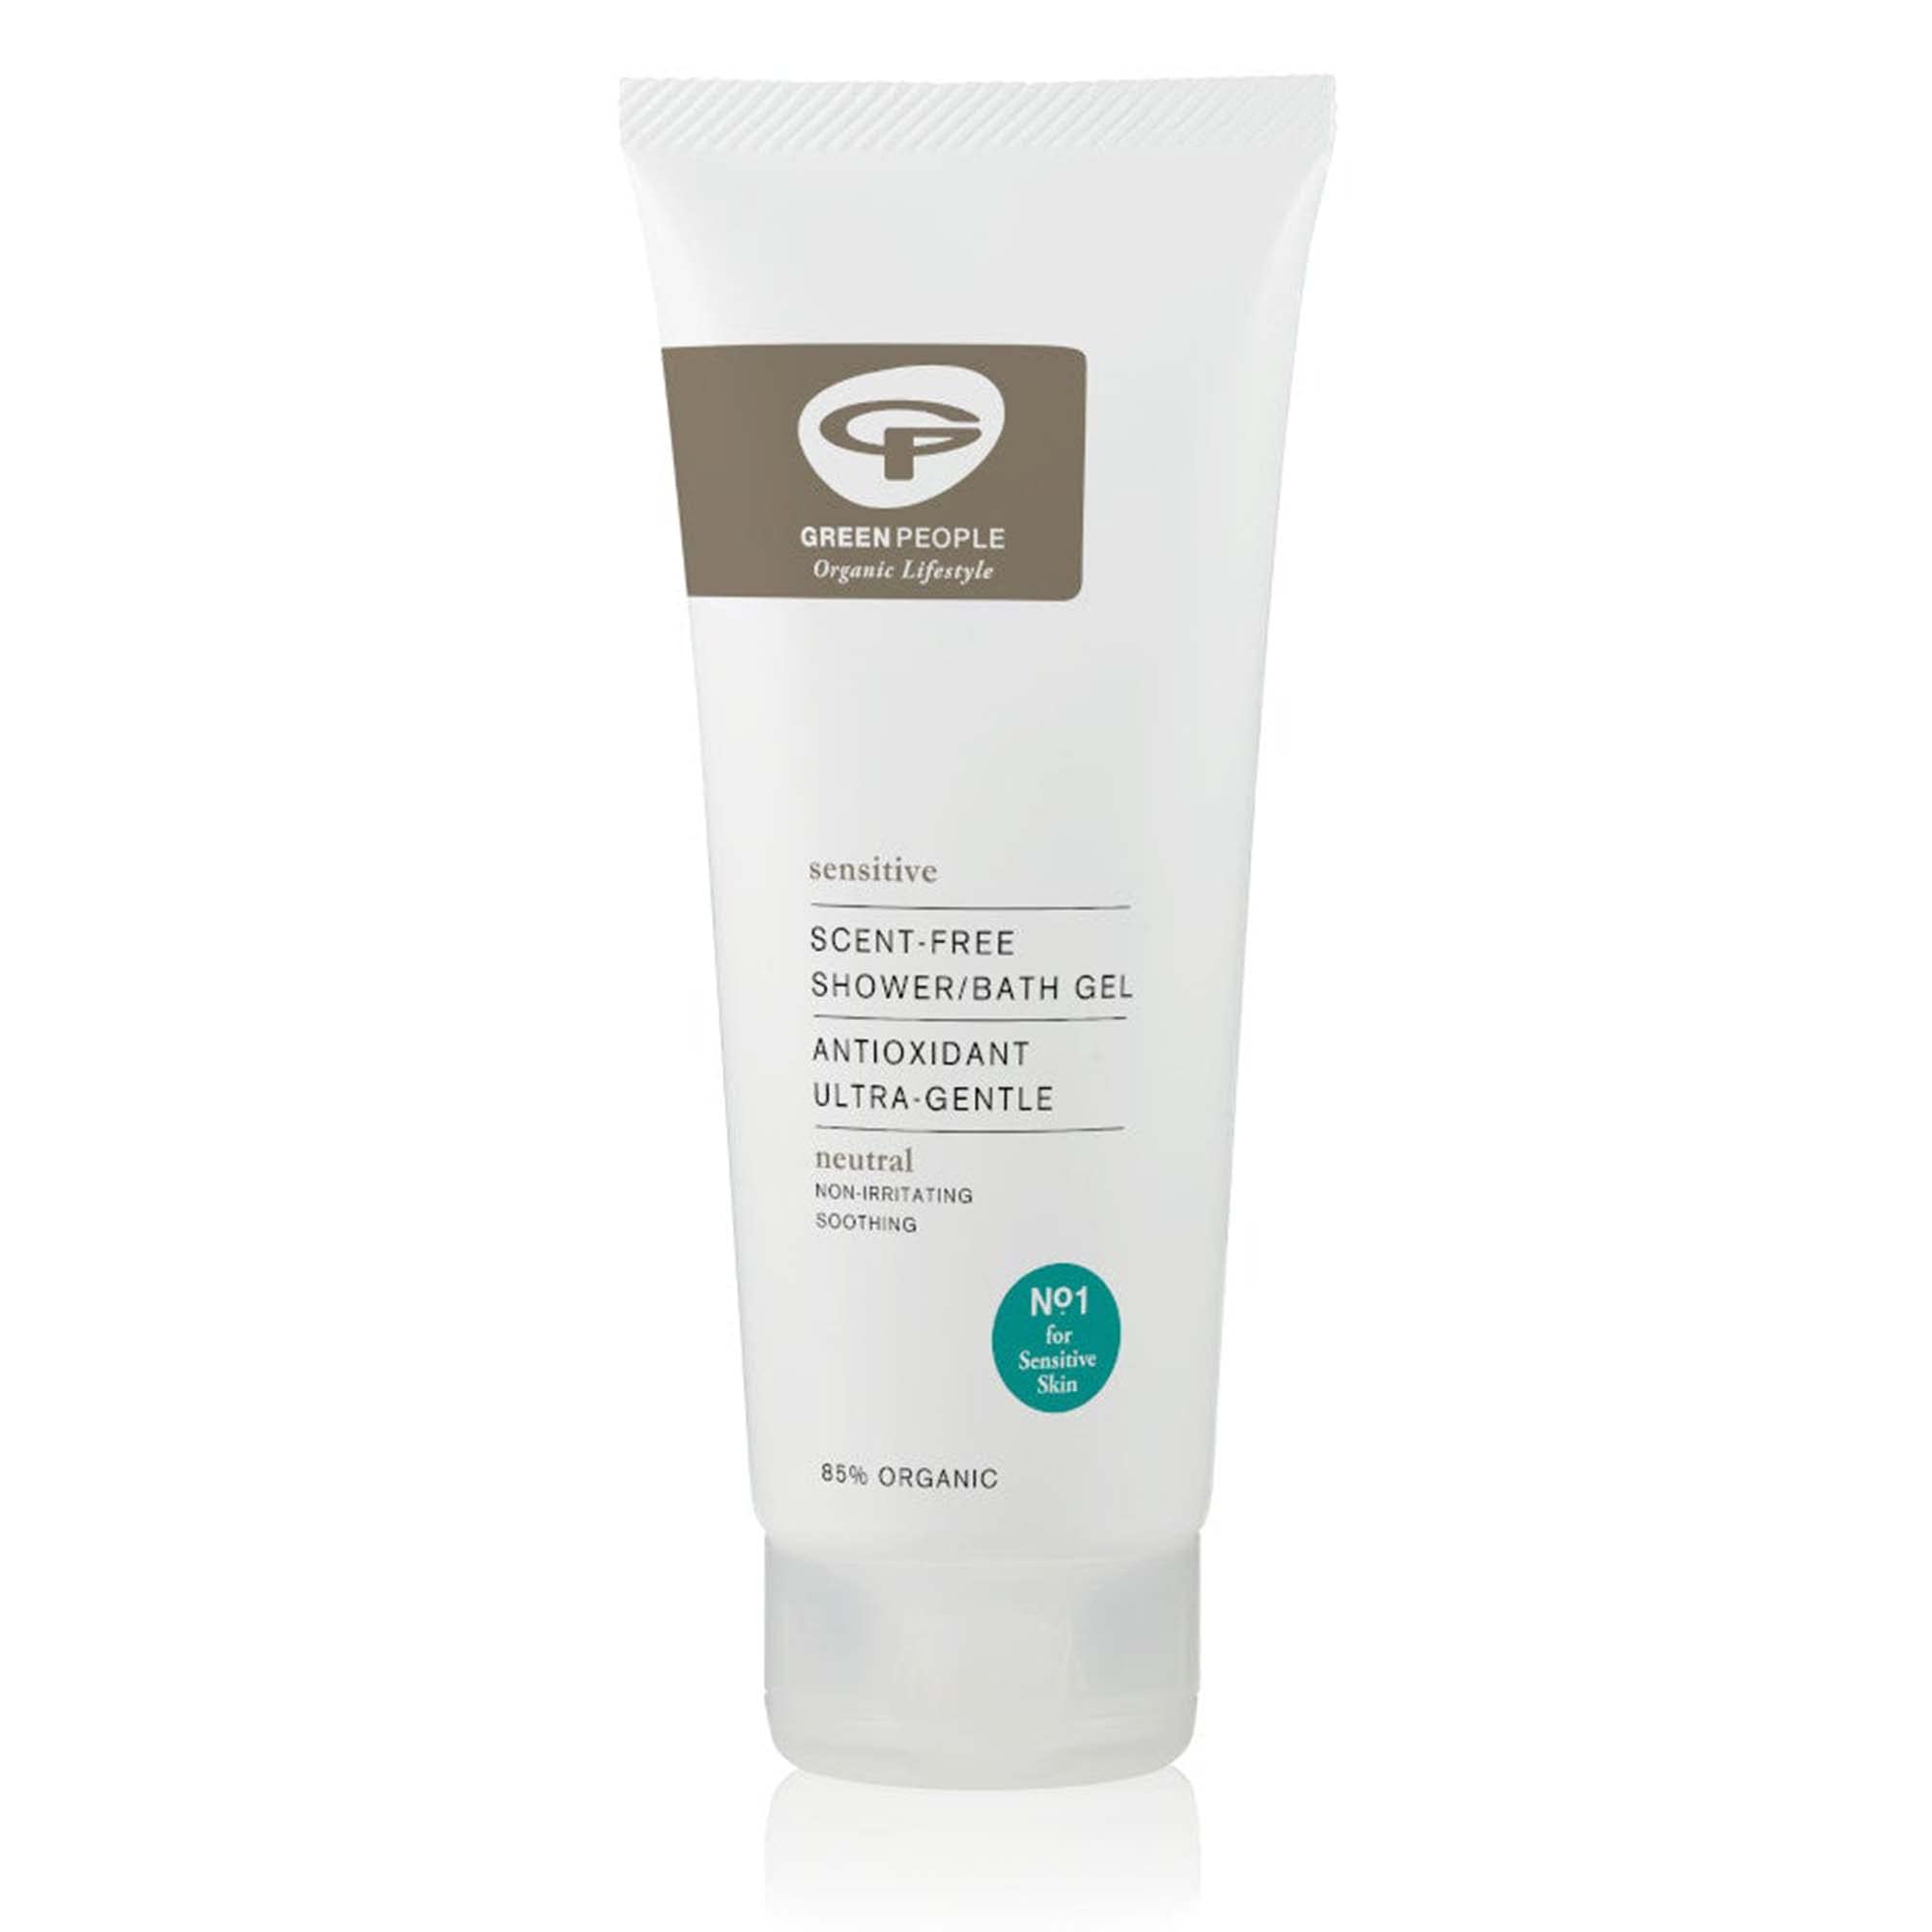 Green People Scent Free Shower Gel 200ml| Natural & Organic Sensitive Body Wash | Eczema-Friendly Ultra-Gentle Shower Wash for Sensitive Skin | SLS Free & Unperfumed | Cruelty Free & Vegan